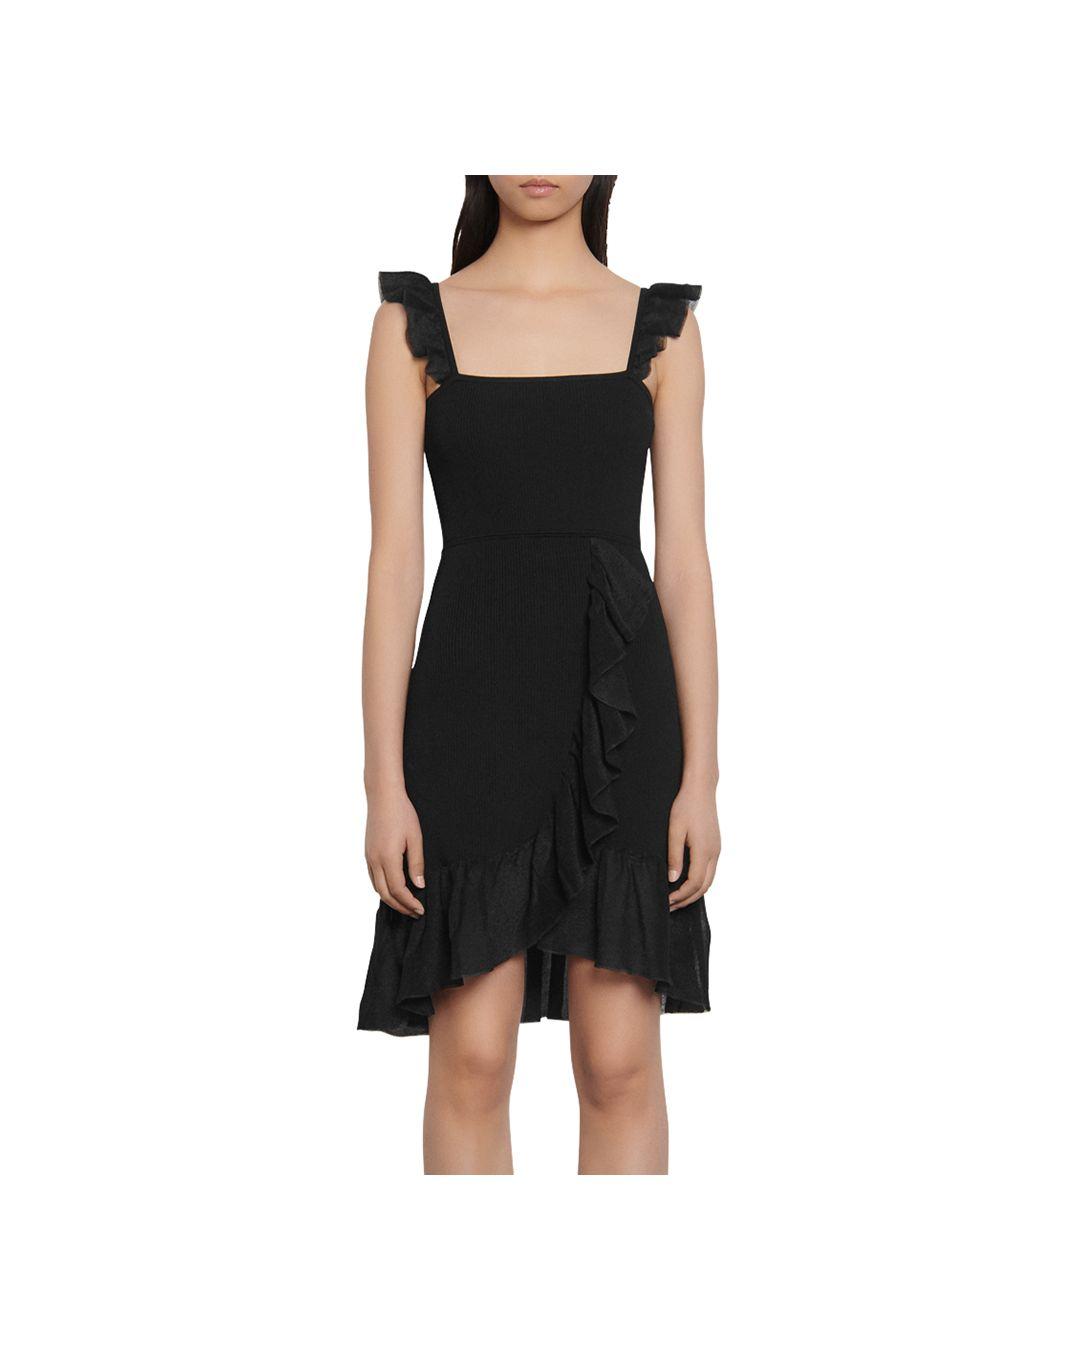 Sandro Synthetic Laurana Ruffled Knit Dress in Black - Lyst